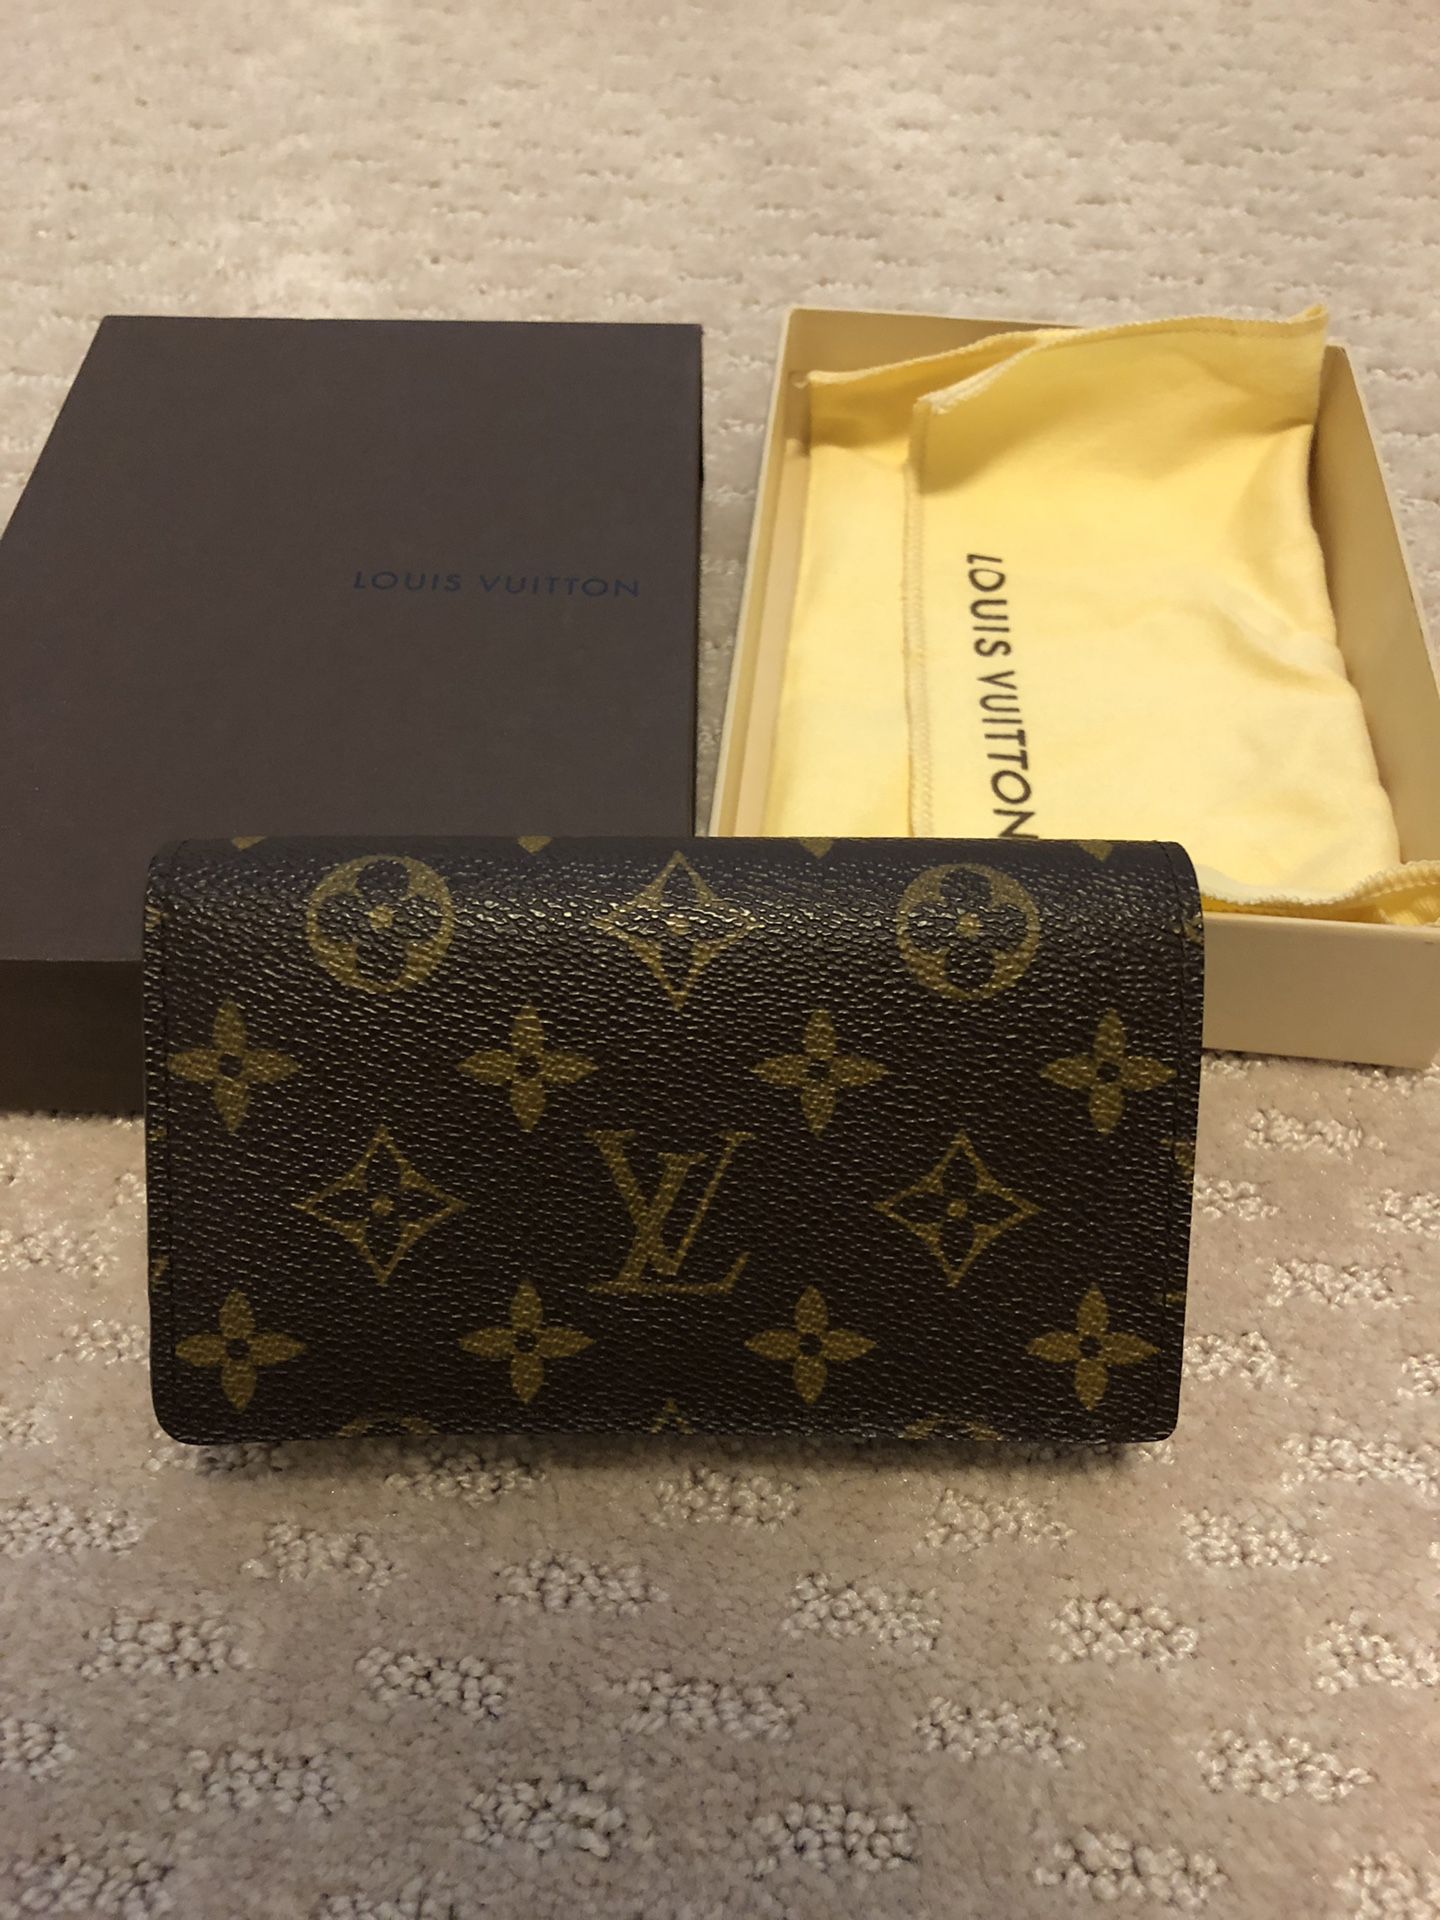 Louis Vuitton flap women’s wallet - new